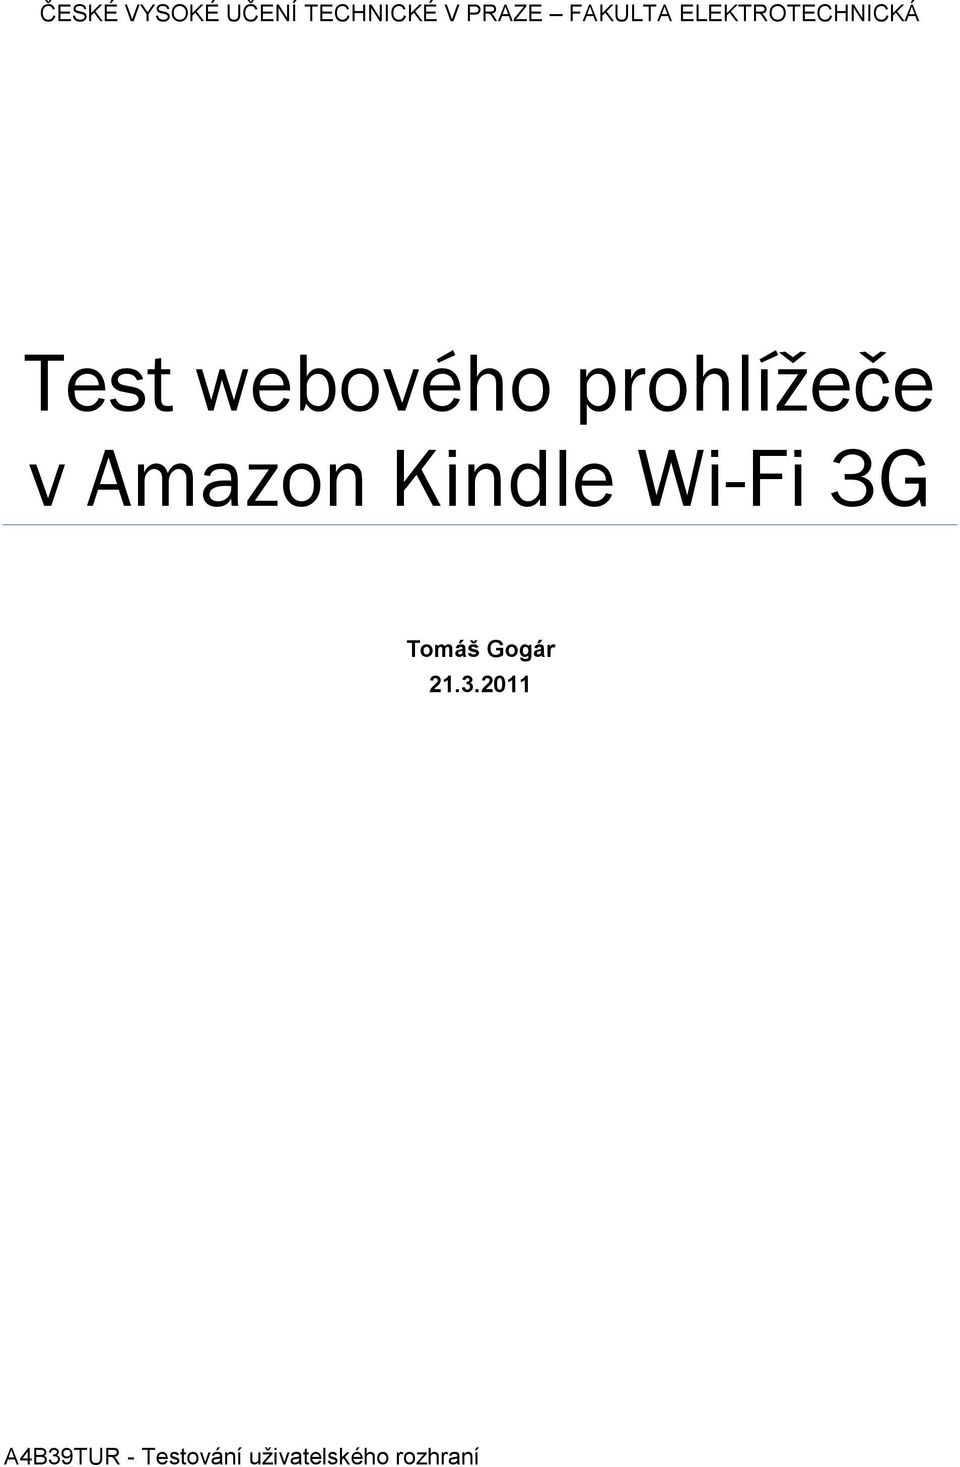 Amazon Kindle Wi-Fi 3G